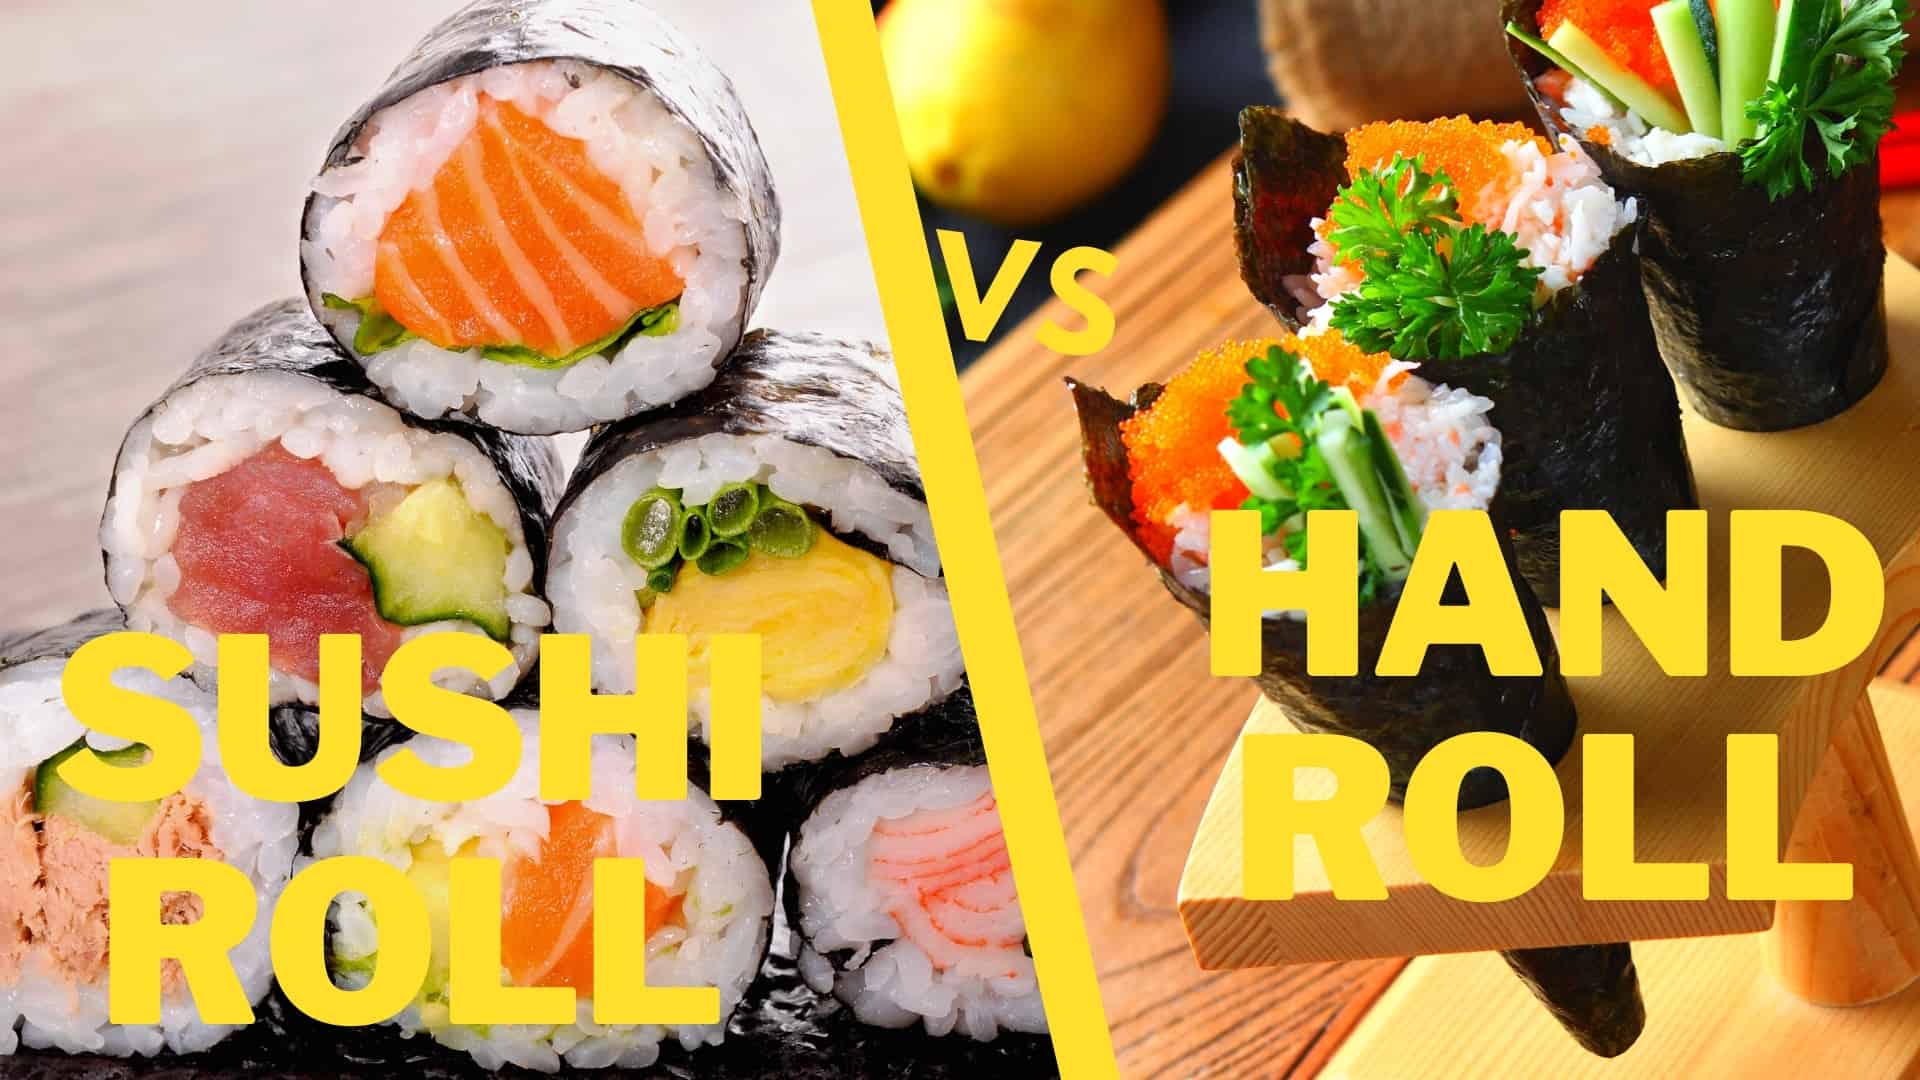 Rollo de sushi vs rollo de mano